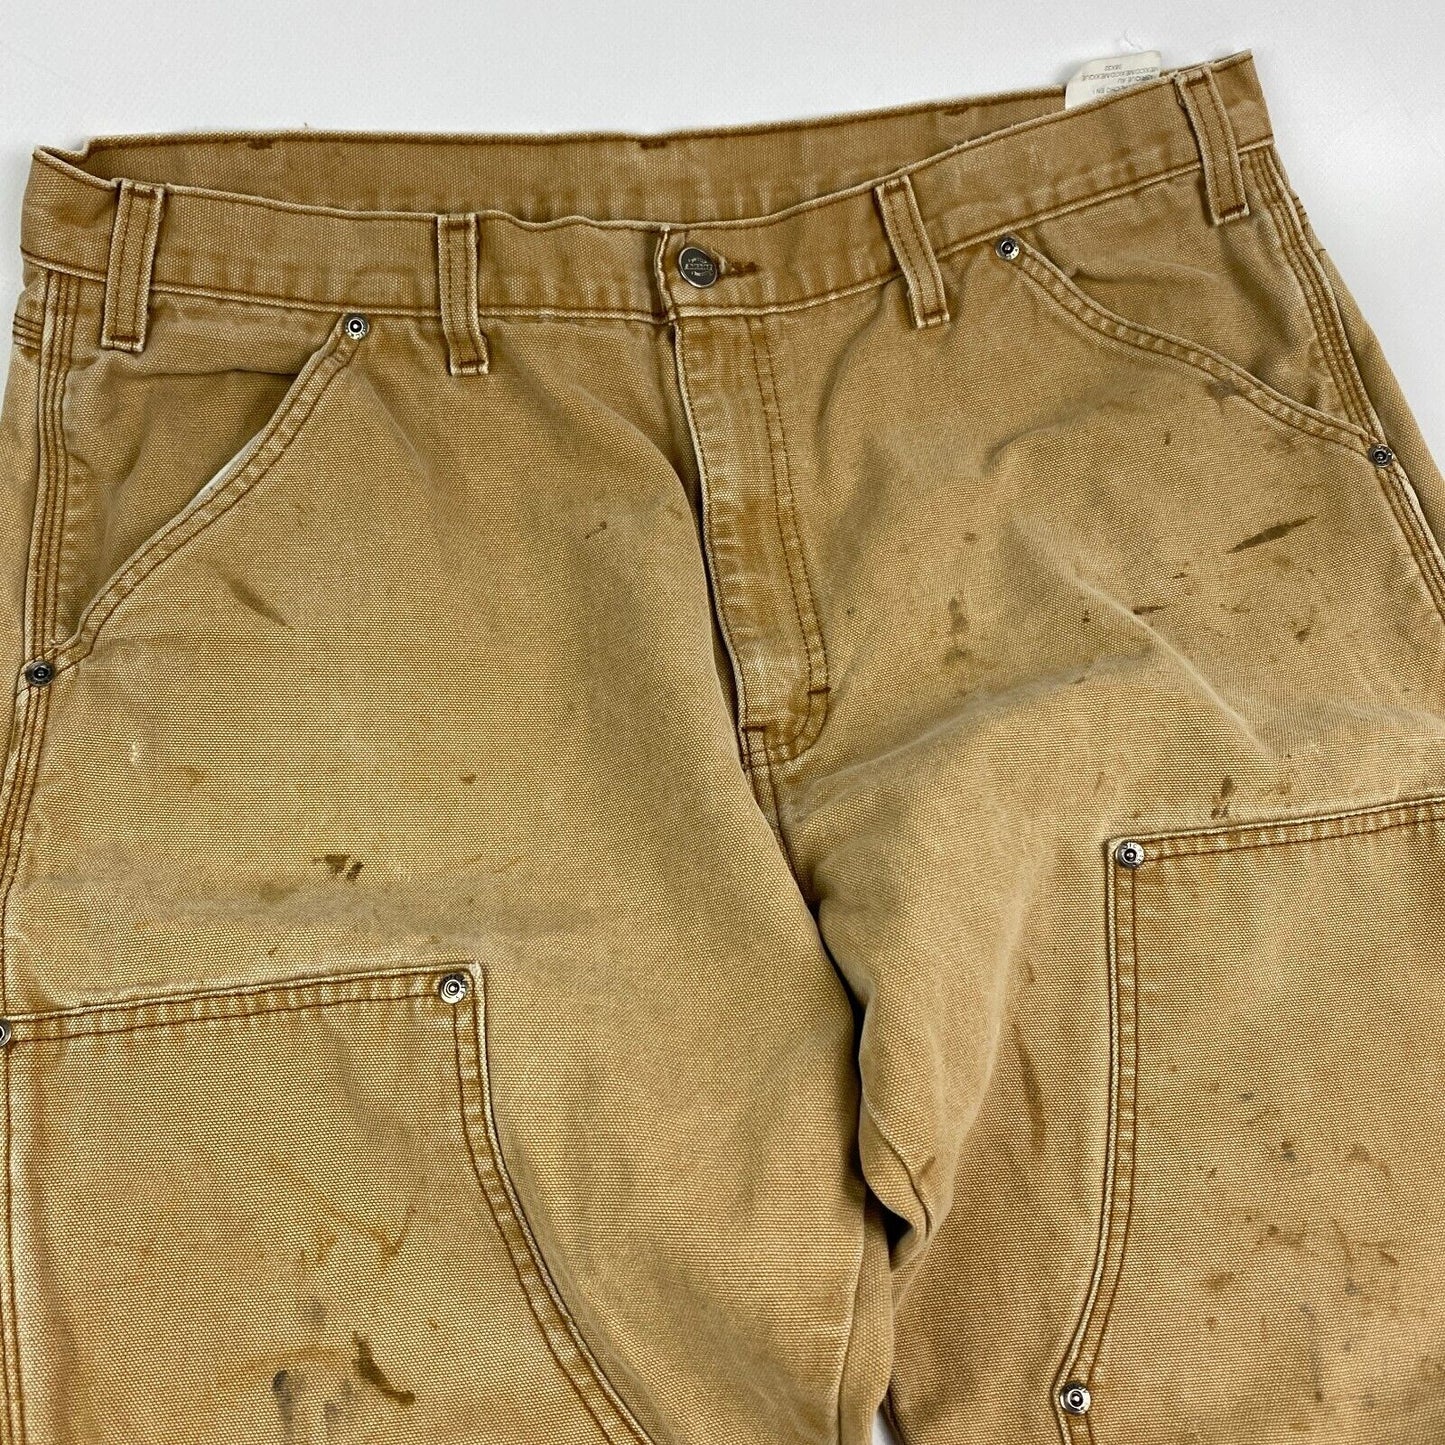 VINTAGE Dickies Faded Distressed Double Knee Workwear Pants sz W38 L30 Mens